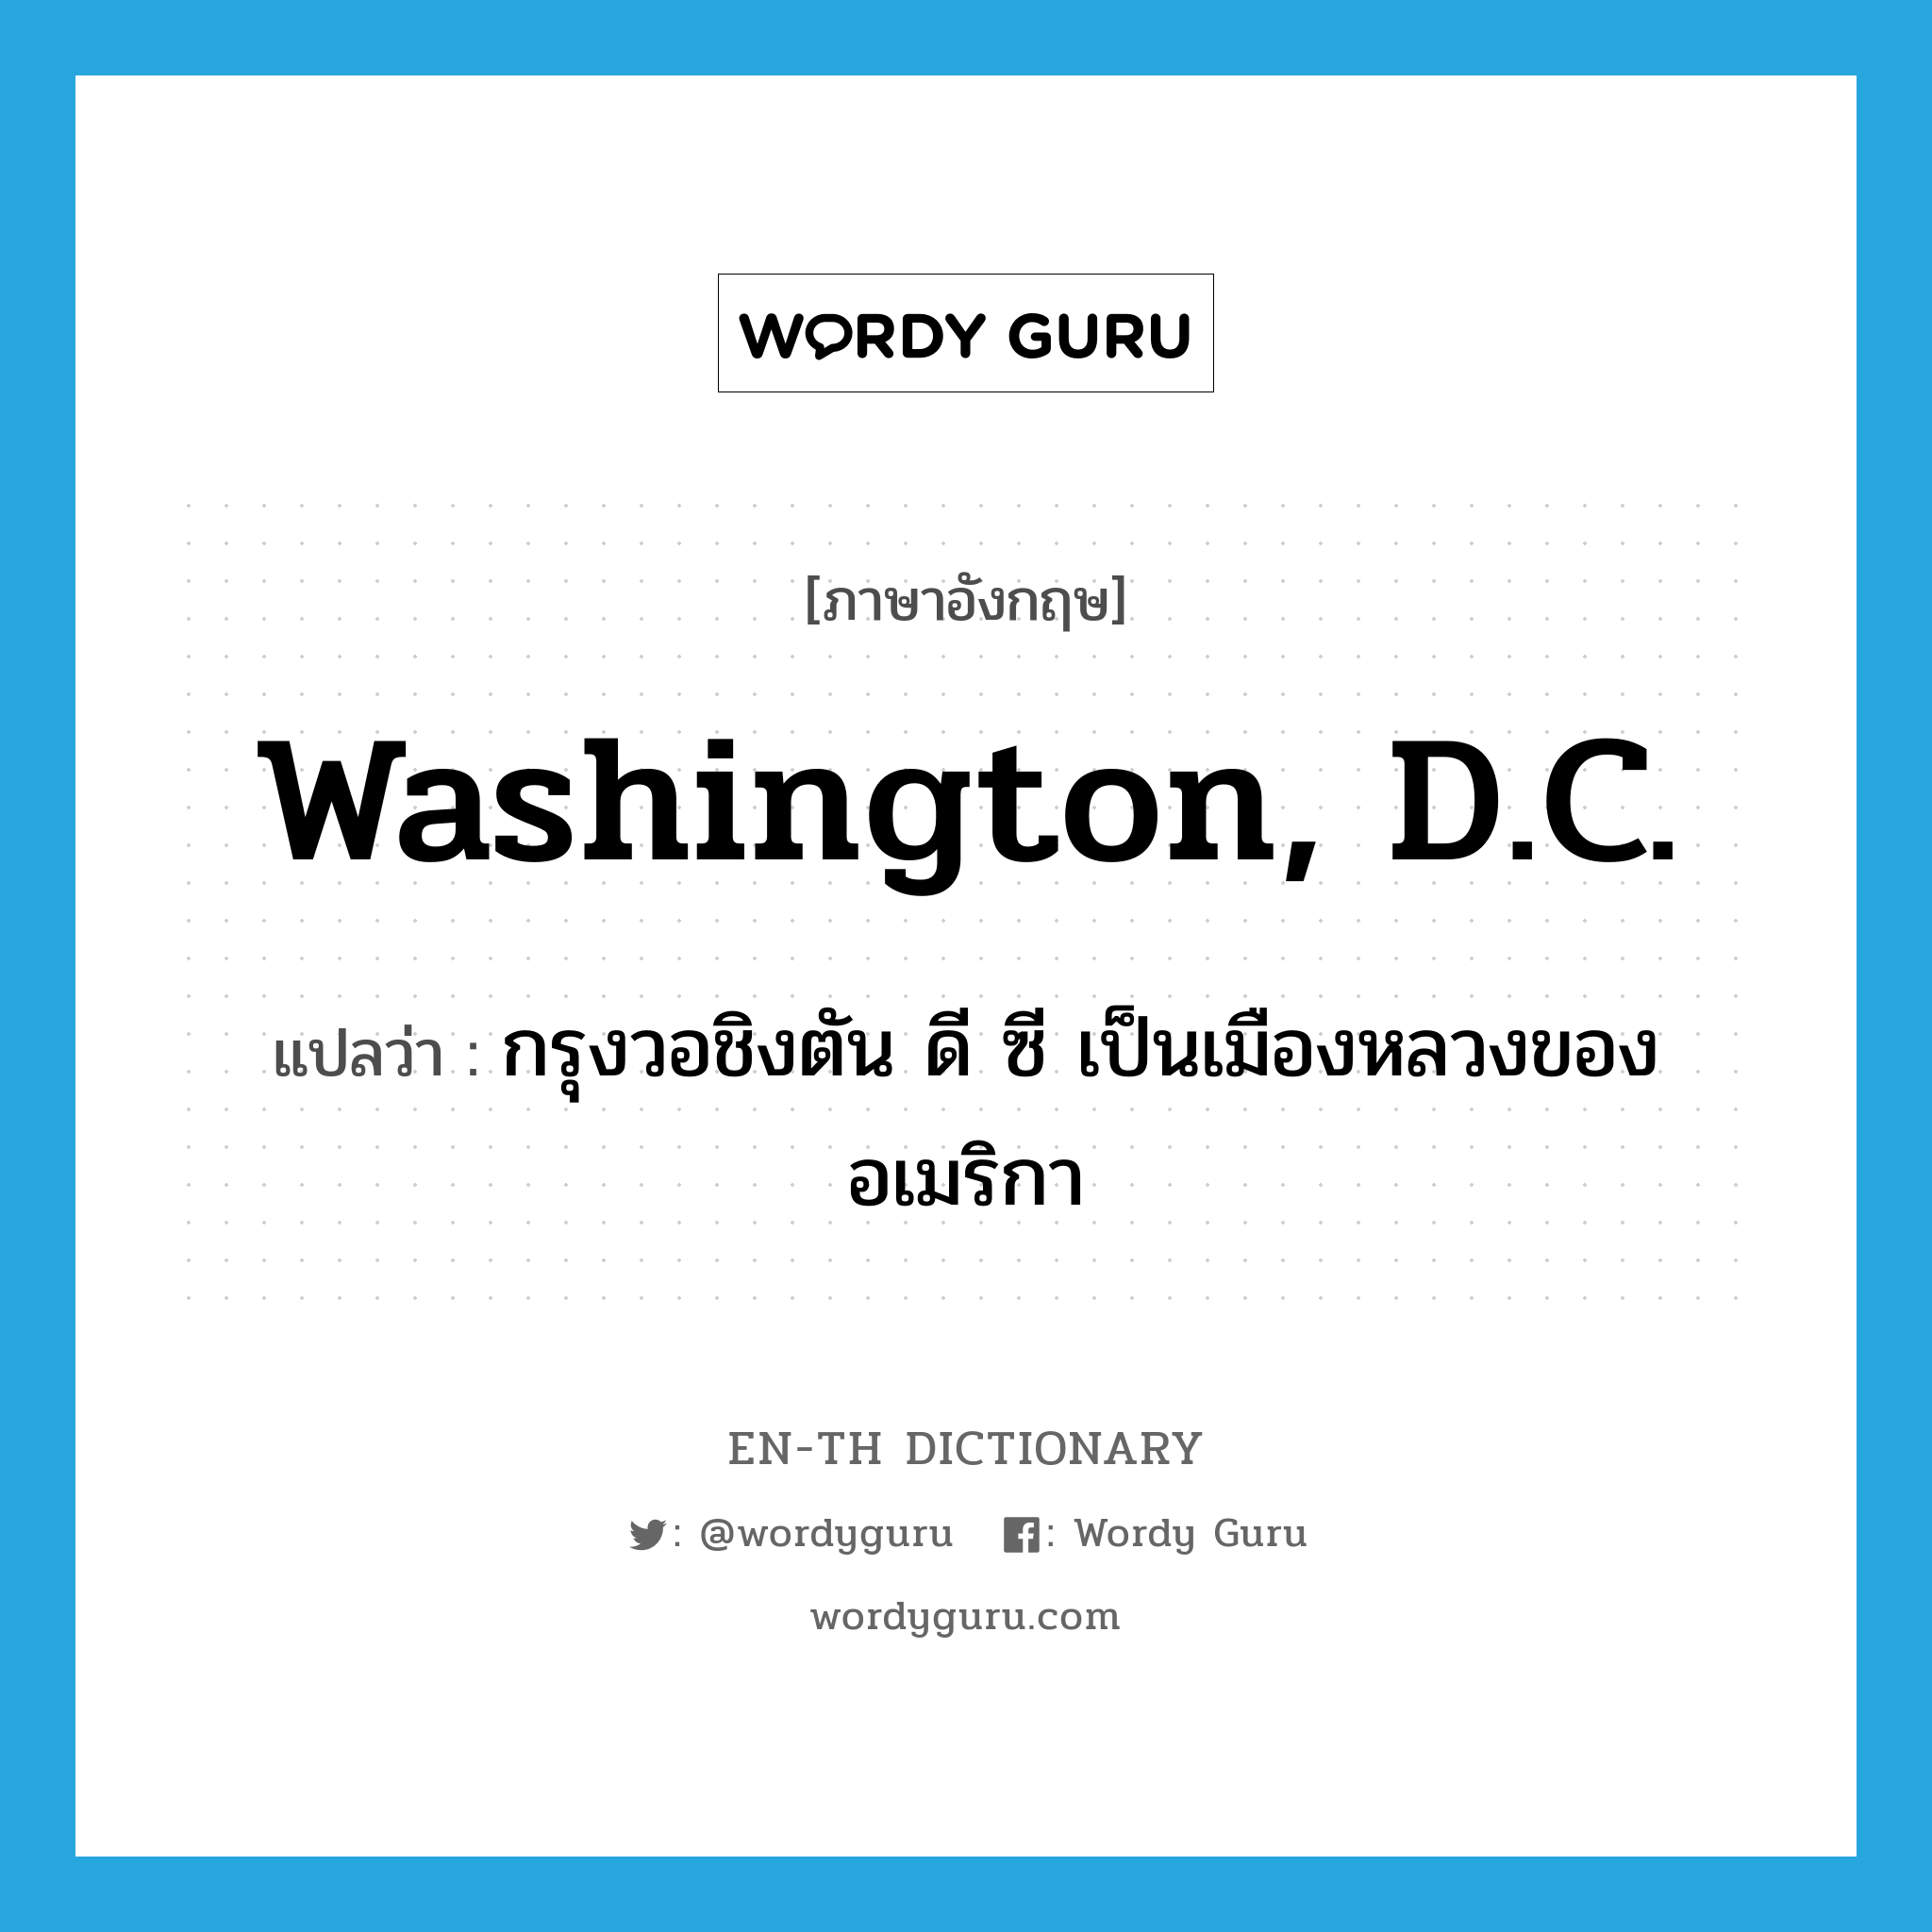 Washington, D.C. แปลว่า?, คำศัพท์ภาษาอังกฤษ Washington, D.C. แปลว่า กรุงวอชิงตัน ดี ซี เป็นเมืองหลวงของอเมริกา ประเภท N หมวด N